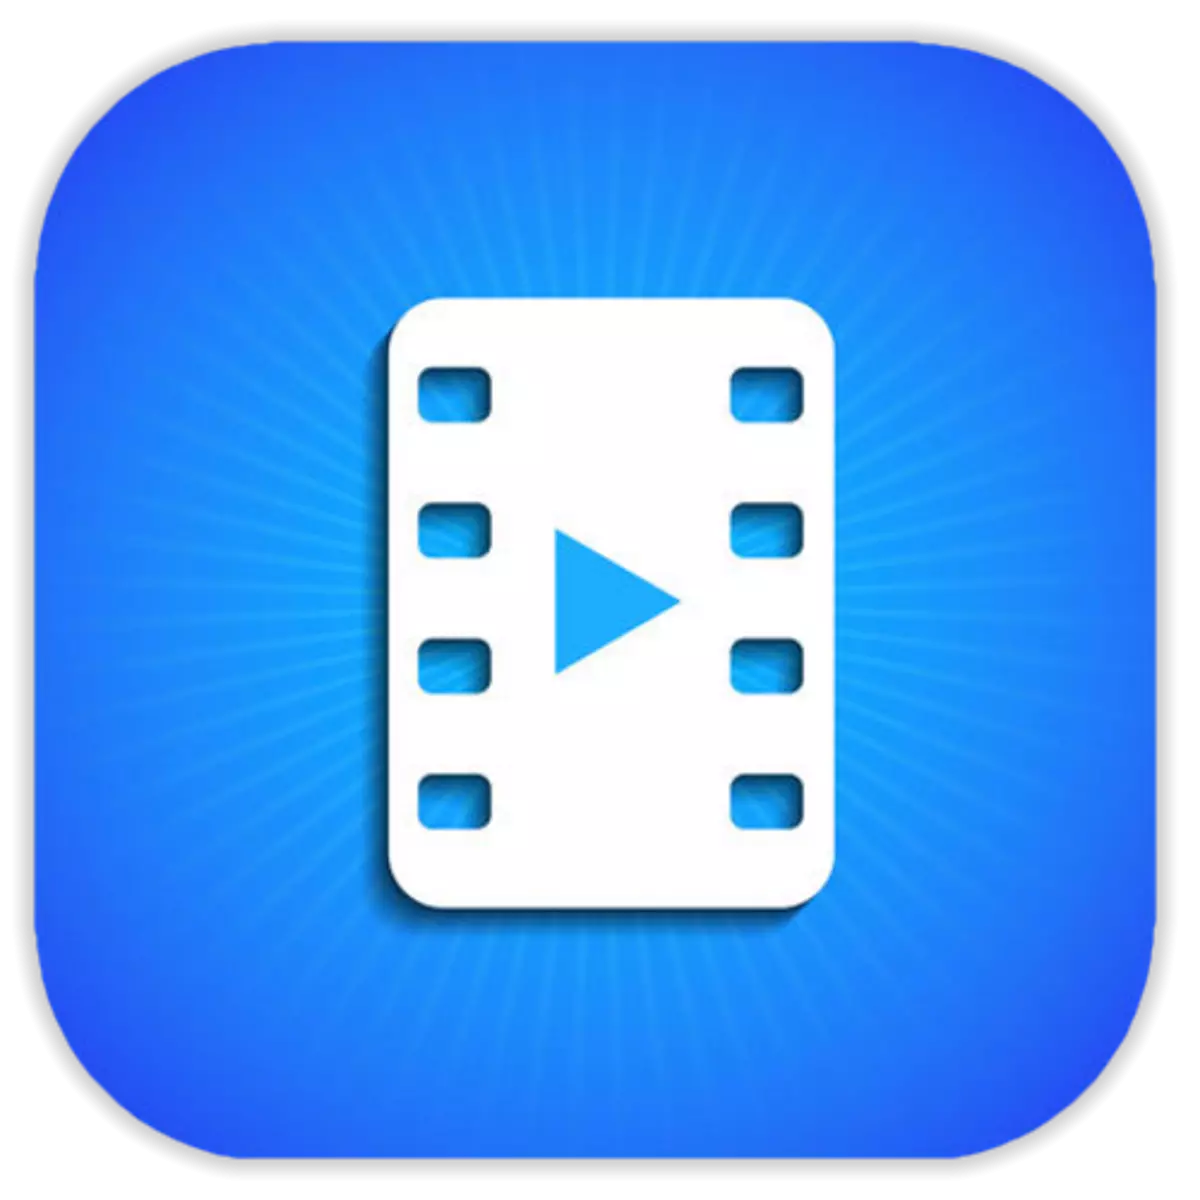 Video Saver Pro 360 iz WiFi - Preuzmite video iz VKontakte na iPhone